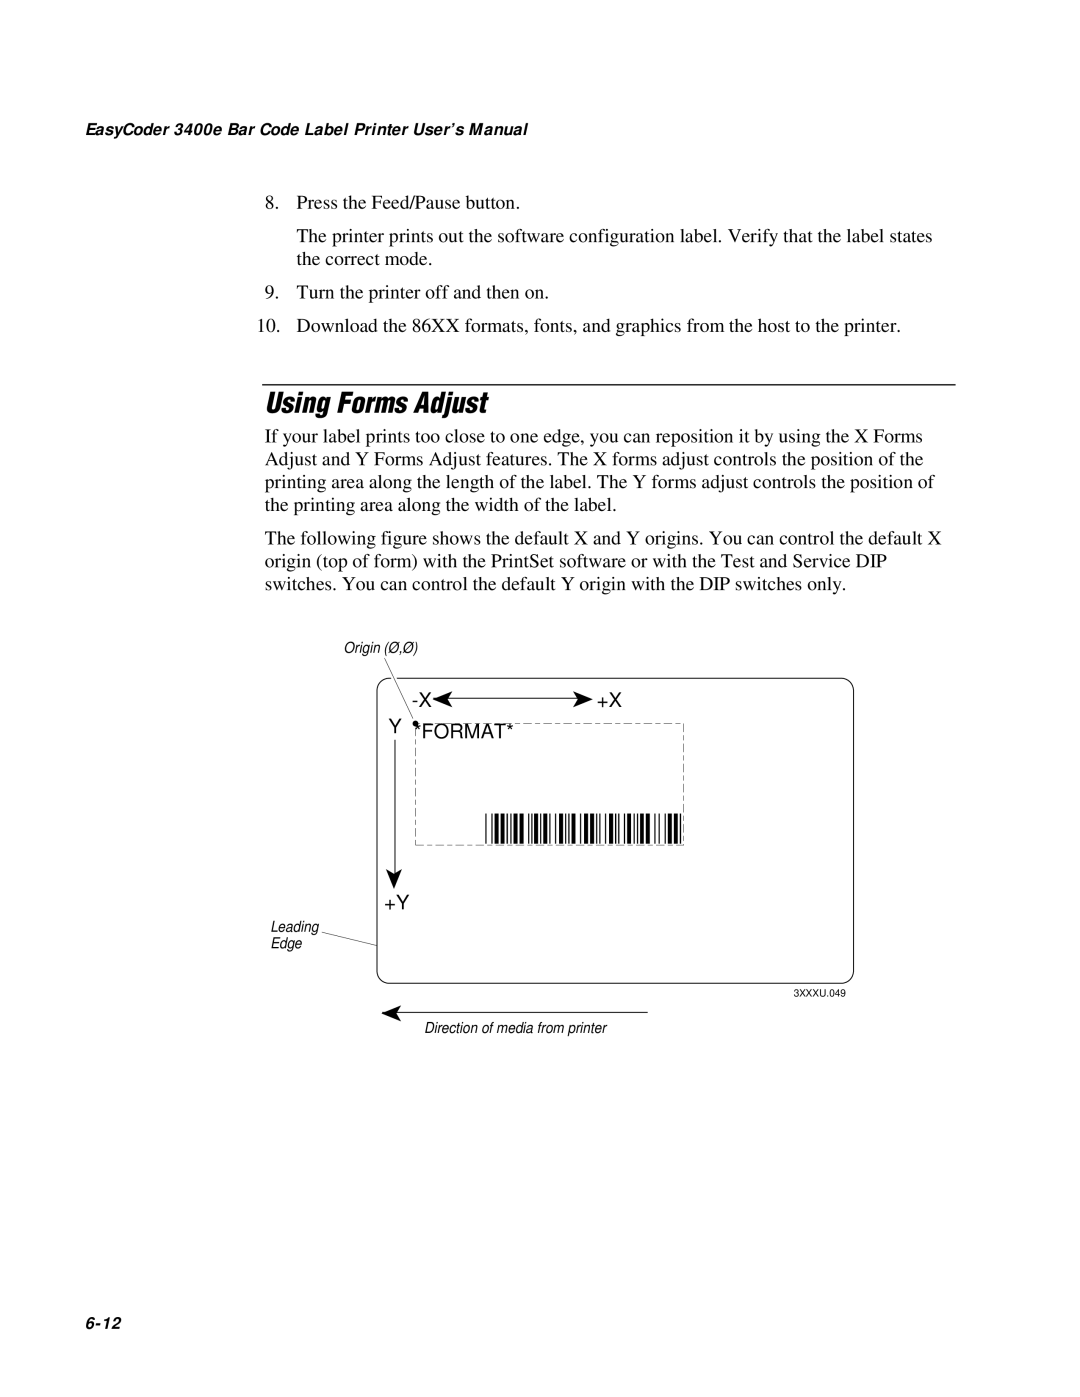 IBM user manual Using Forms Adjust, Format, EasyCoder 3400e Bar Code Label Printer User’s Manual, 6-12 